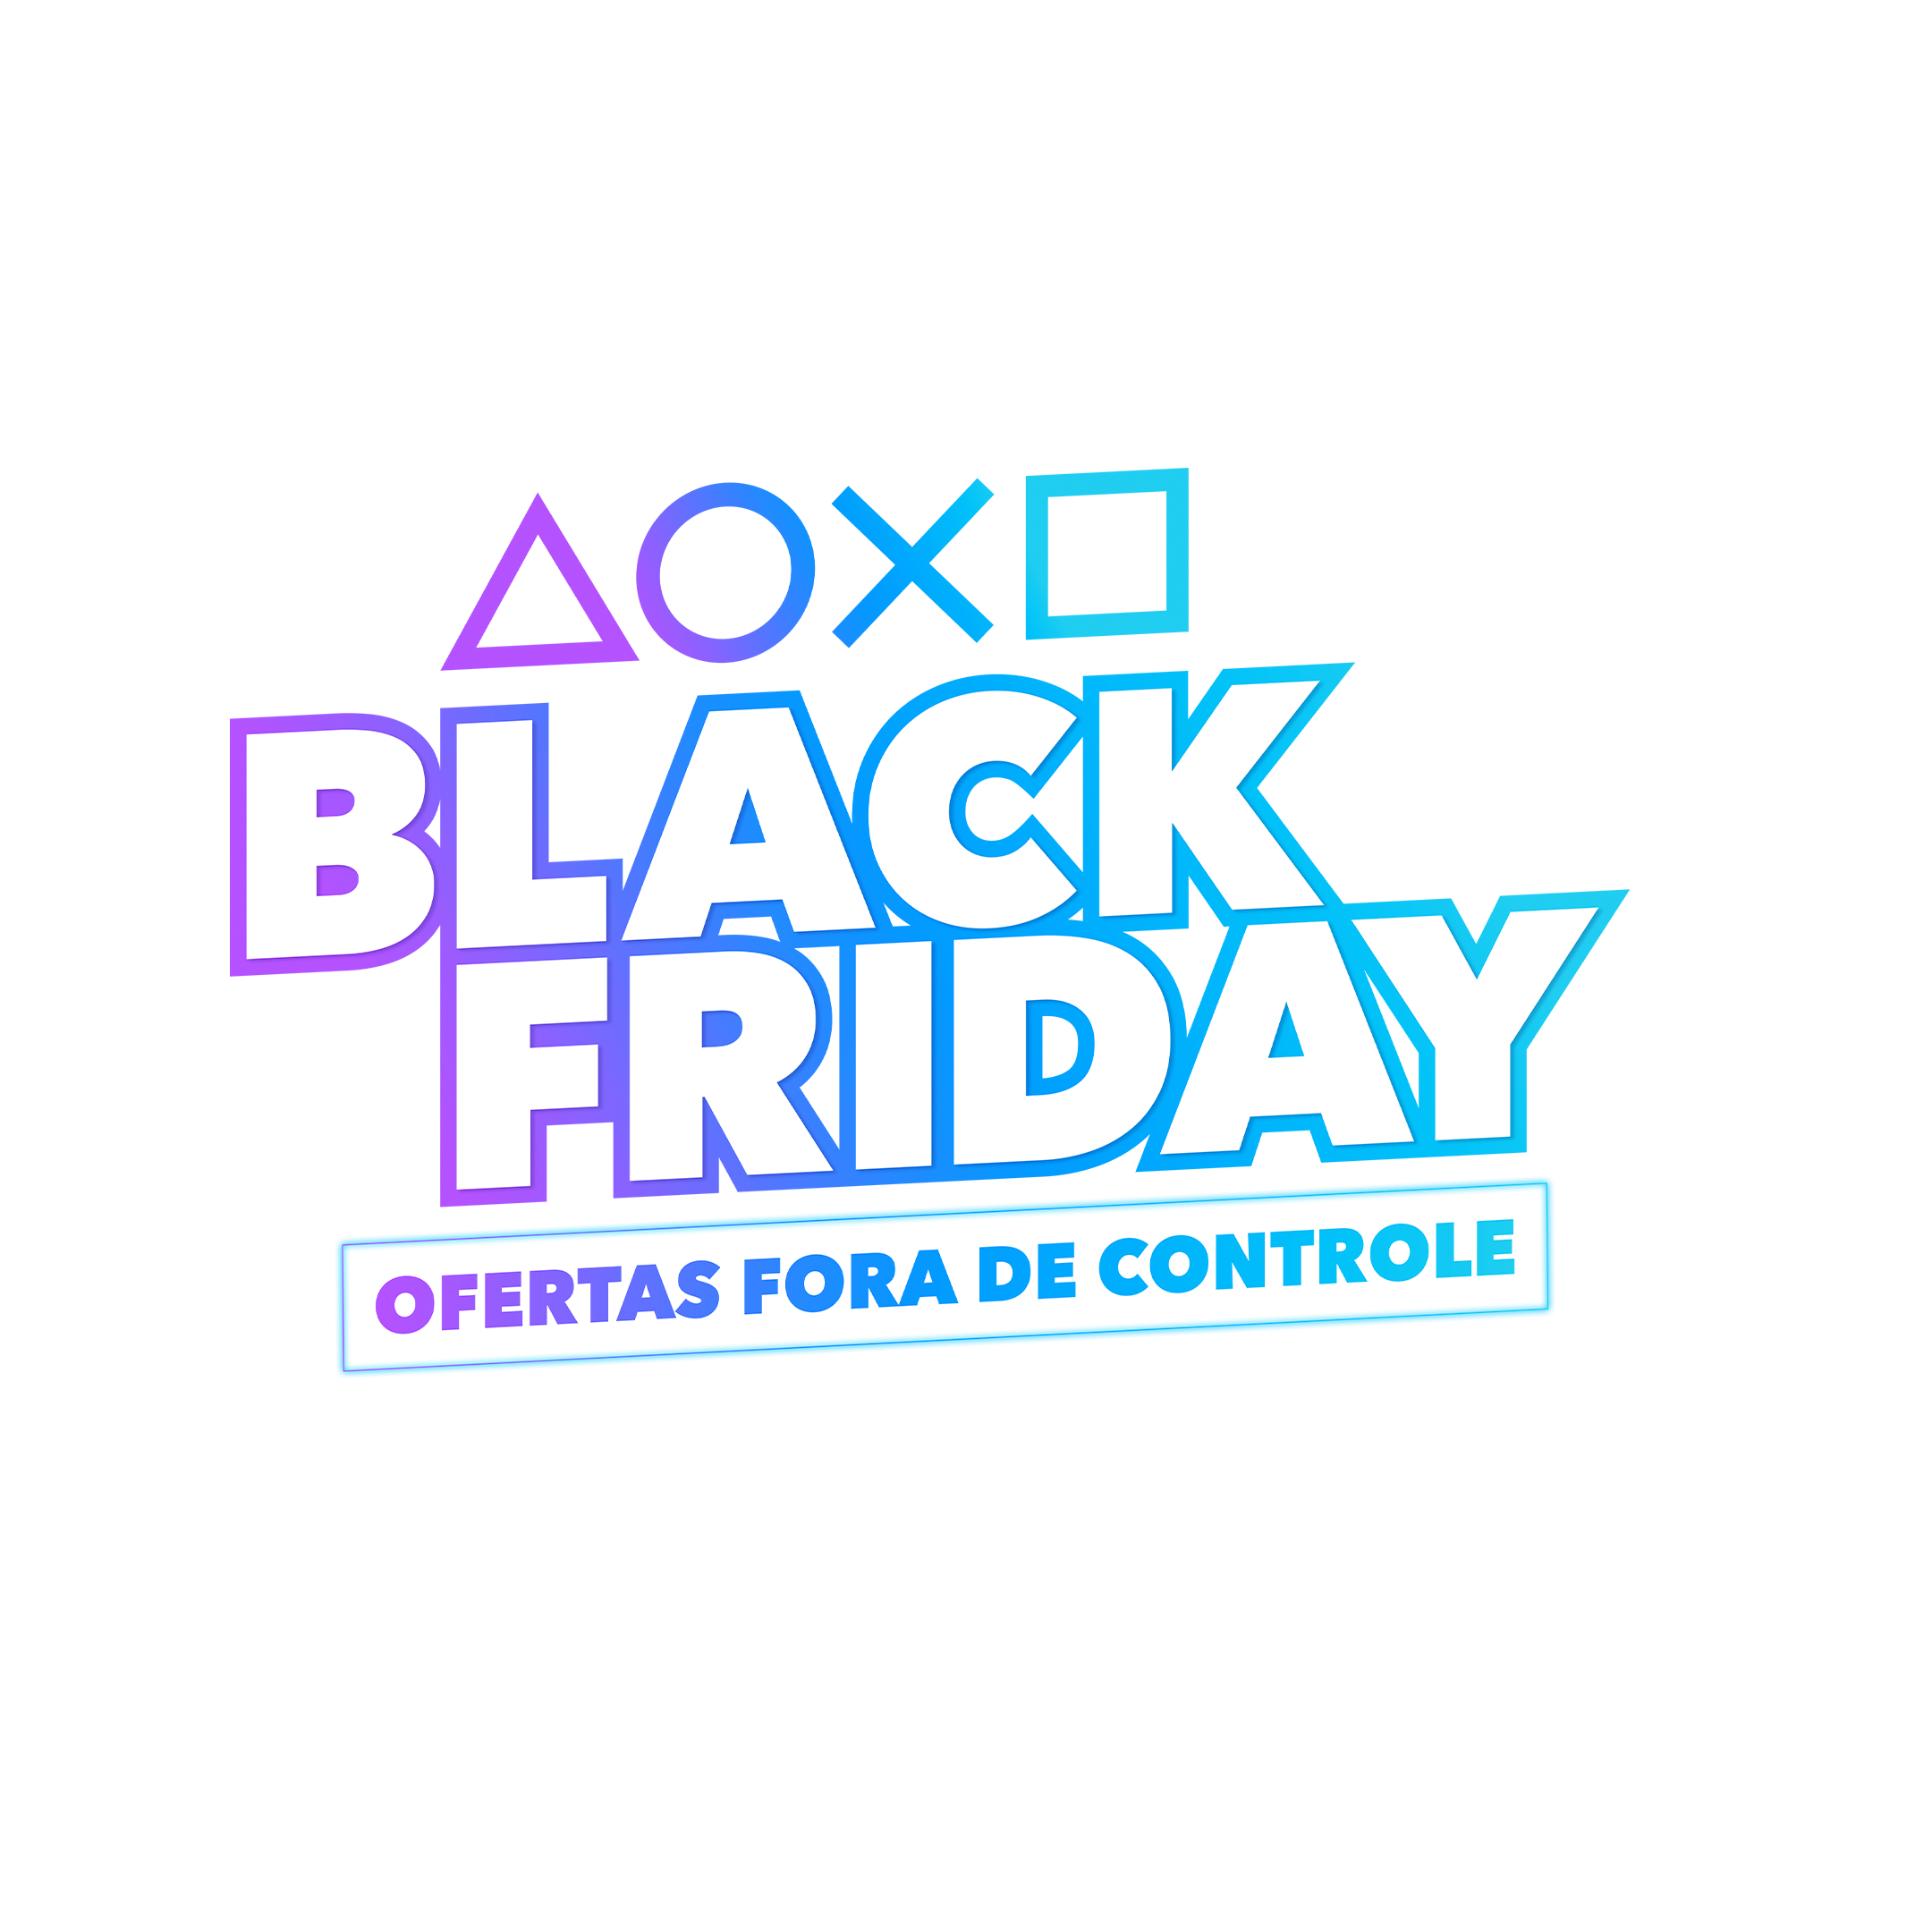 Ofertas imperdíveis  PlayStation™Store oficial Brasil